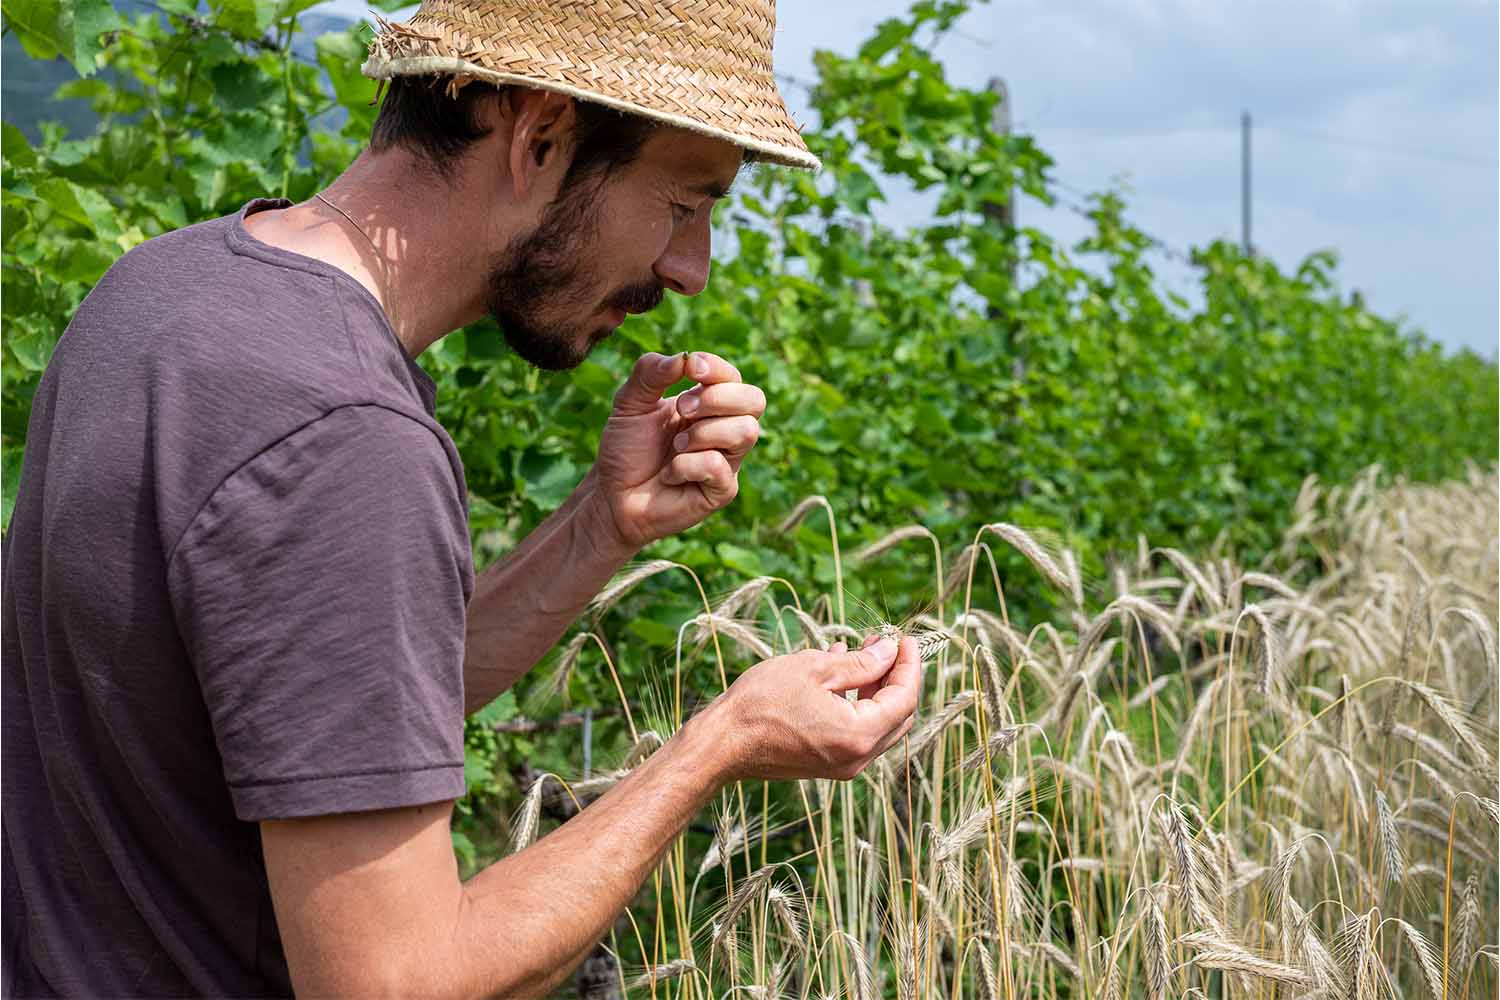 Cover crops play a key role at Thomas Niedermayr Hof Gandberg in Italy